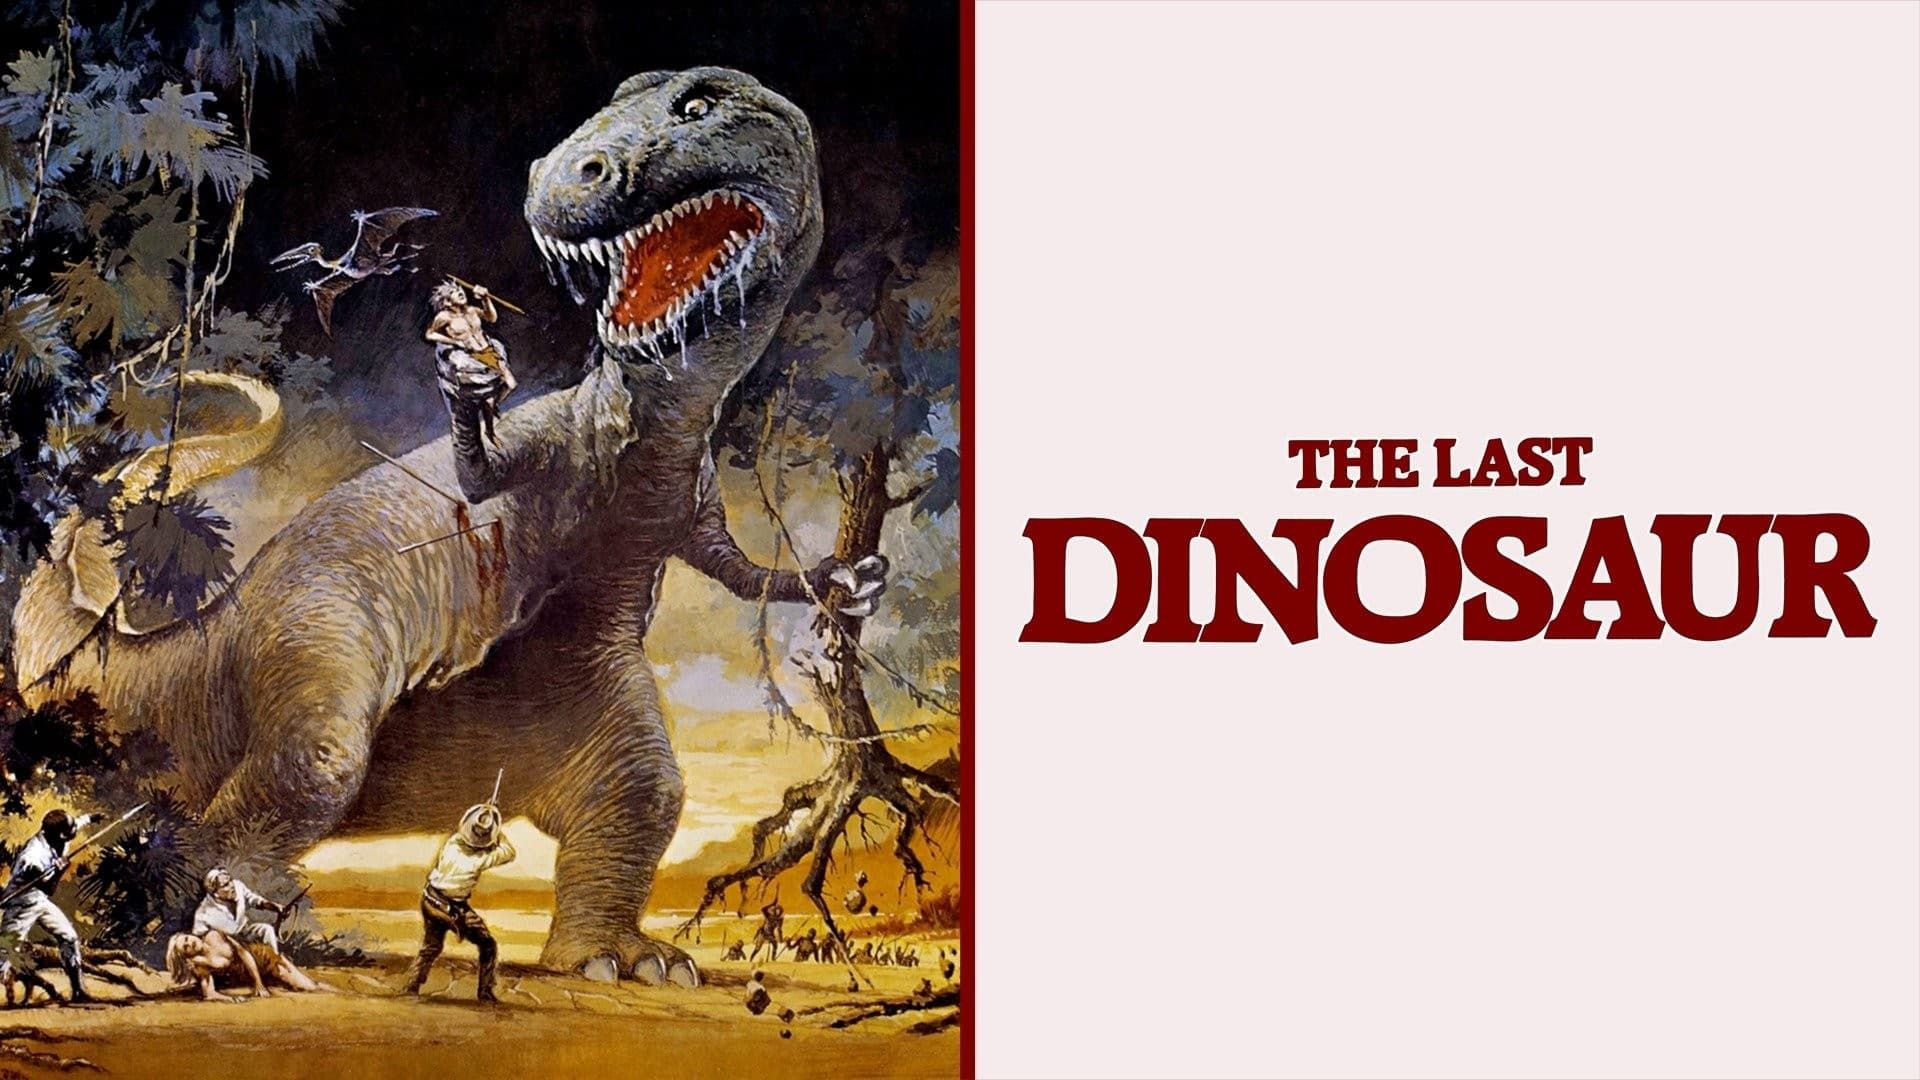 The Last Dinosaur background